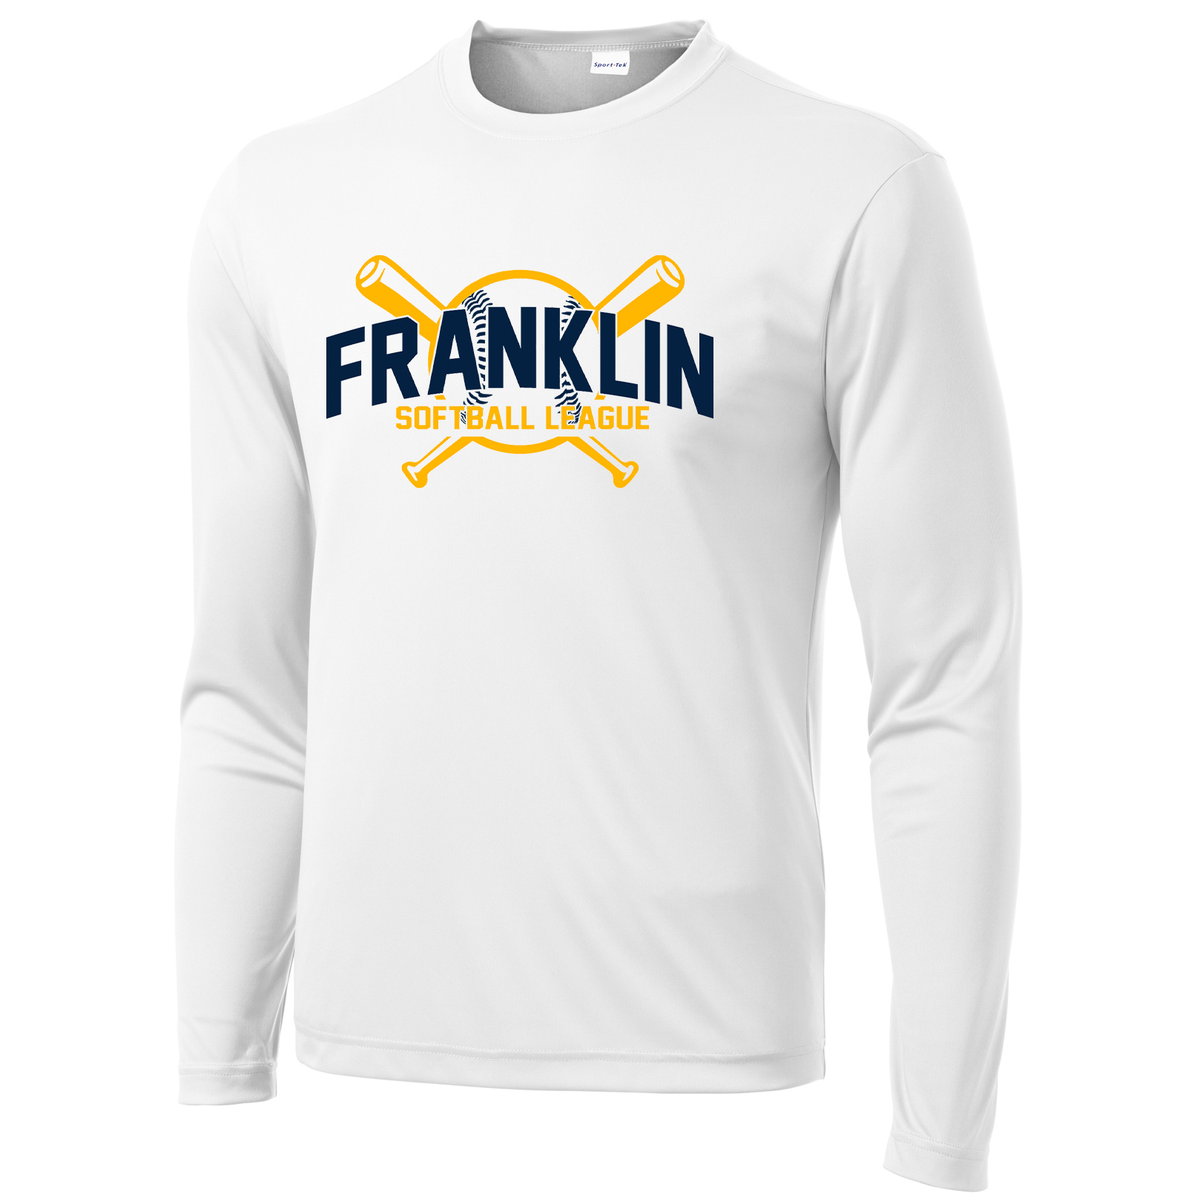 Franklin Township Softball League Long Sleeve Performance Shirt